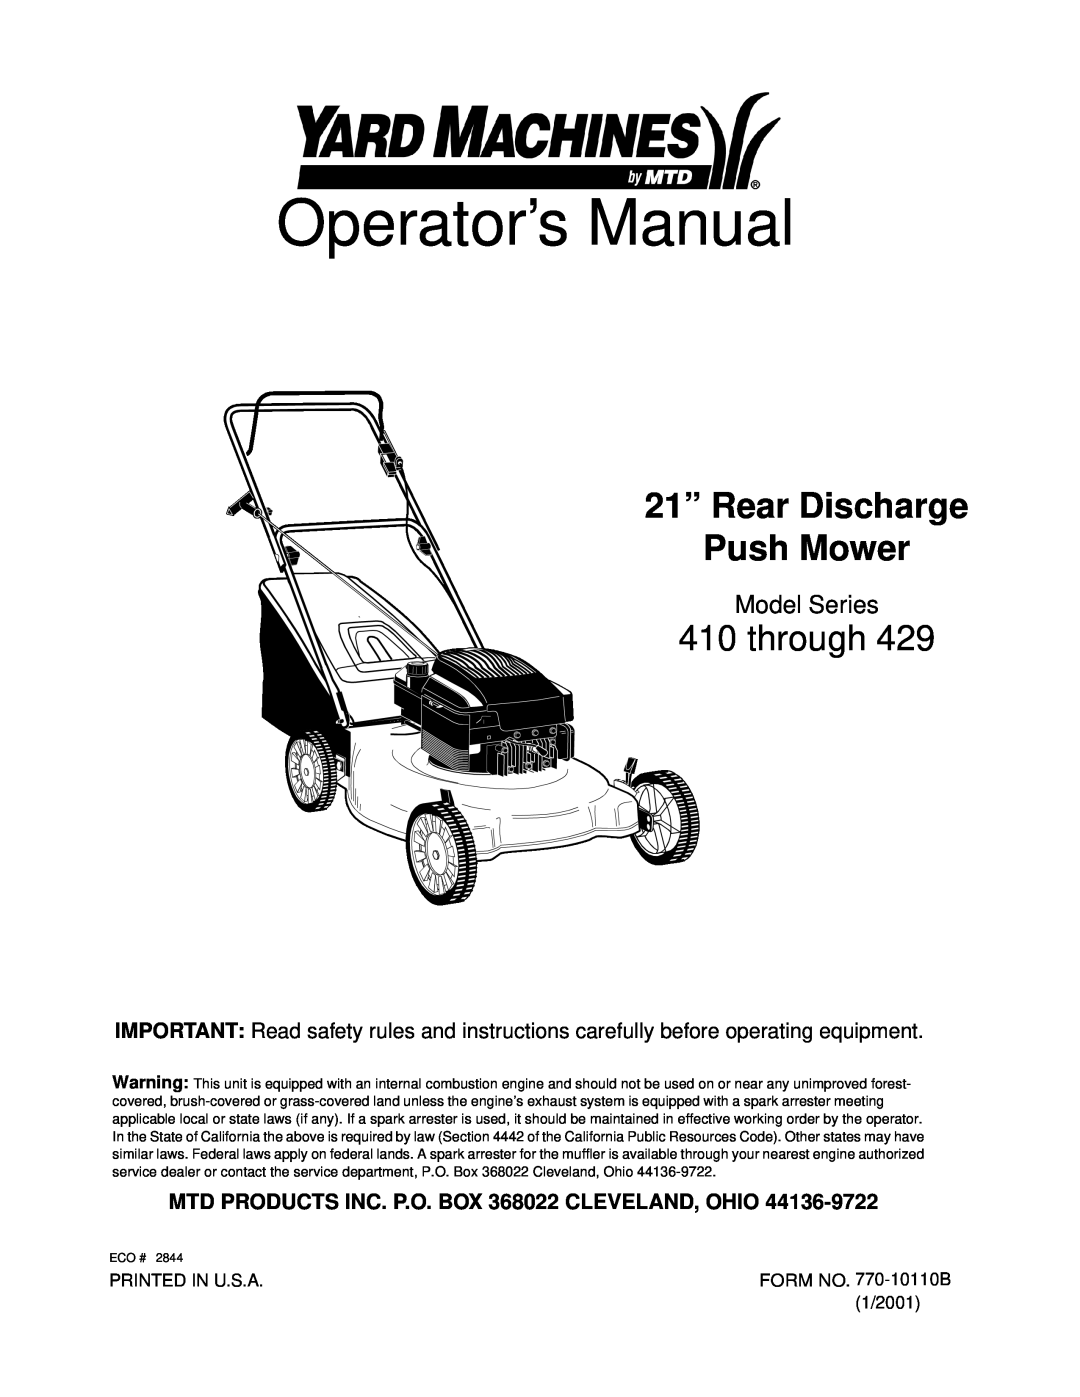 Yard Machines 429 manual Operator’s Manual, 21” Rear Discharge Push Mower, through, Model Series 